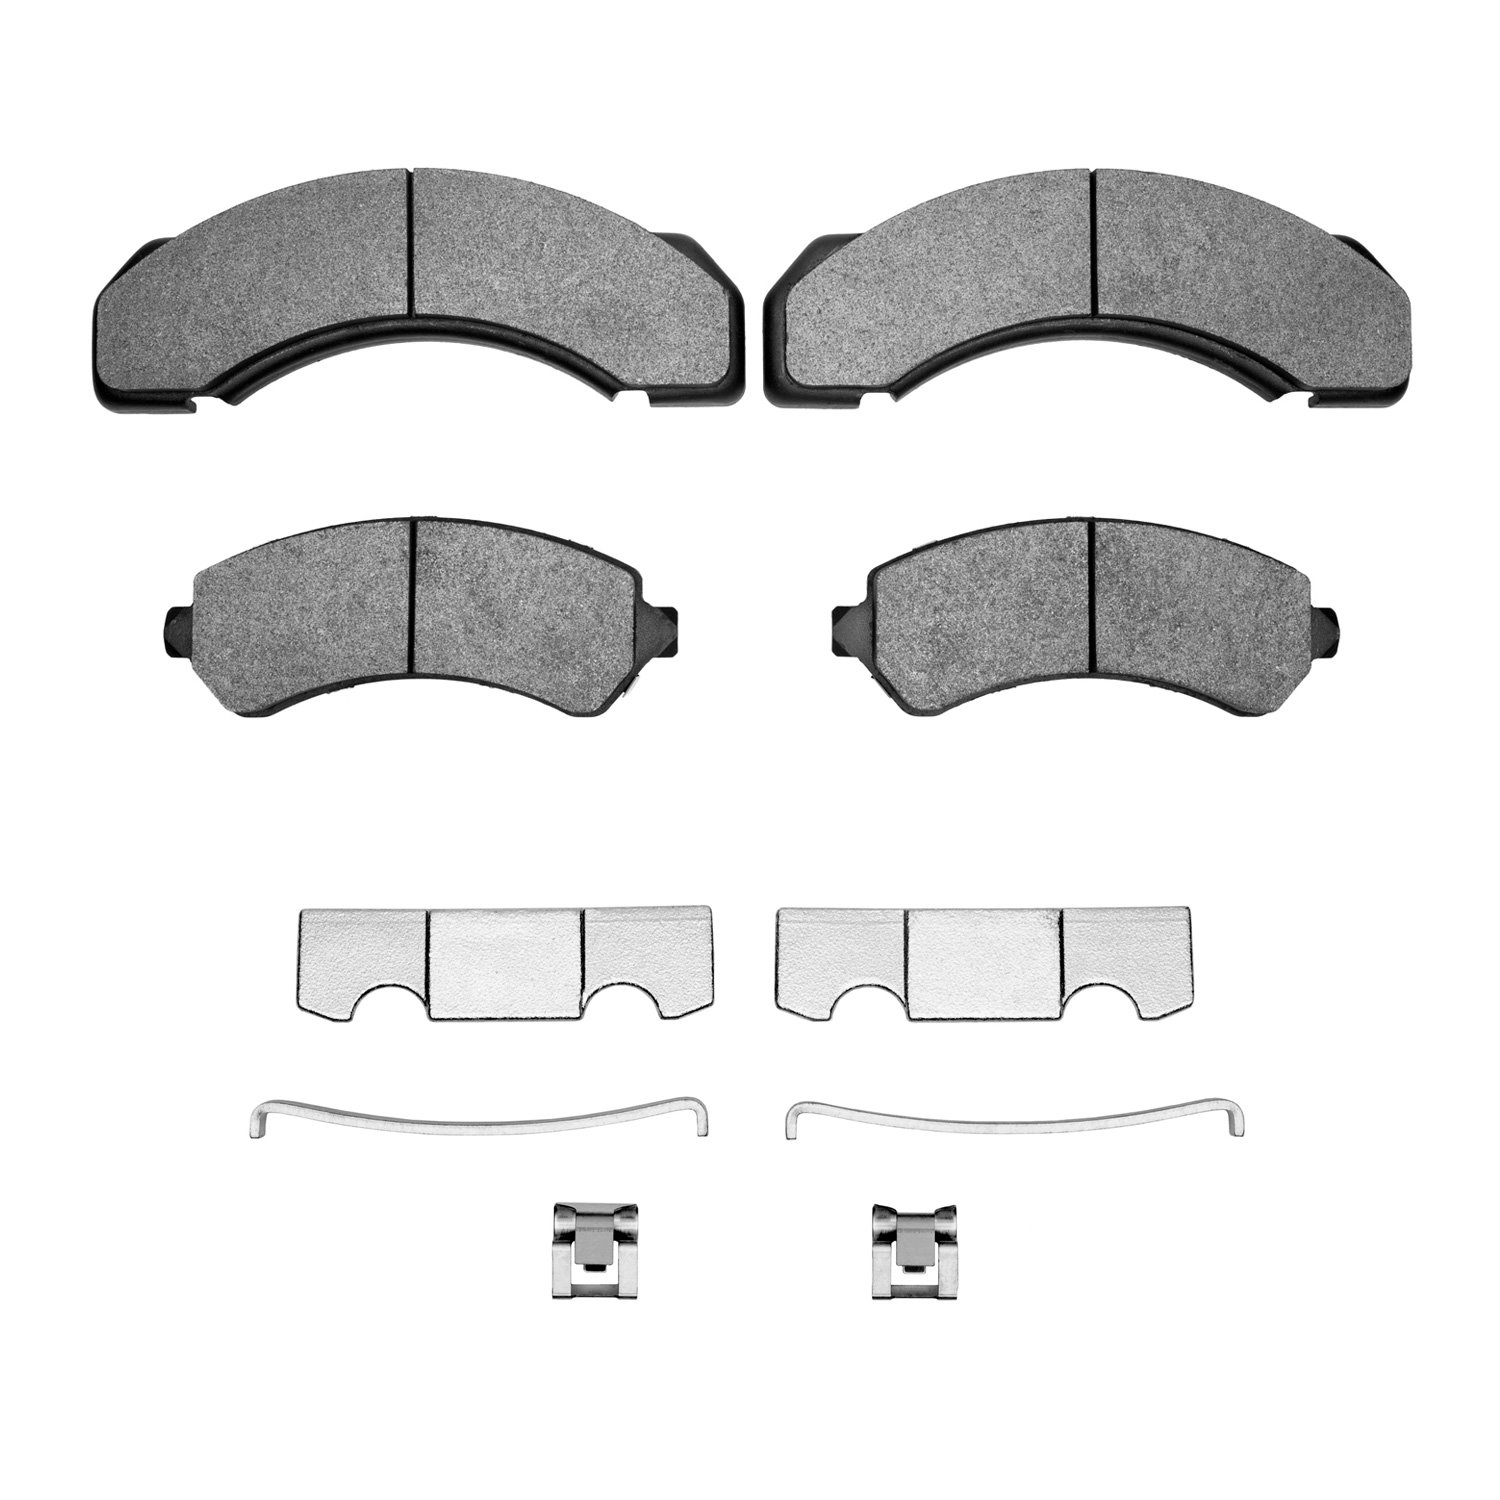 Optimum OE Brake Pads & Hardware Kit, 1973-2012 Fits Multiple Makes/Models, Position: Front & Rear